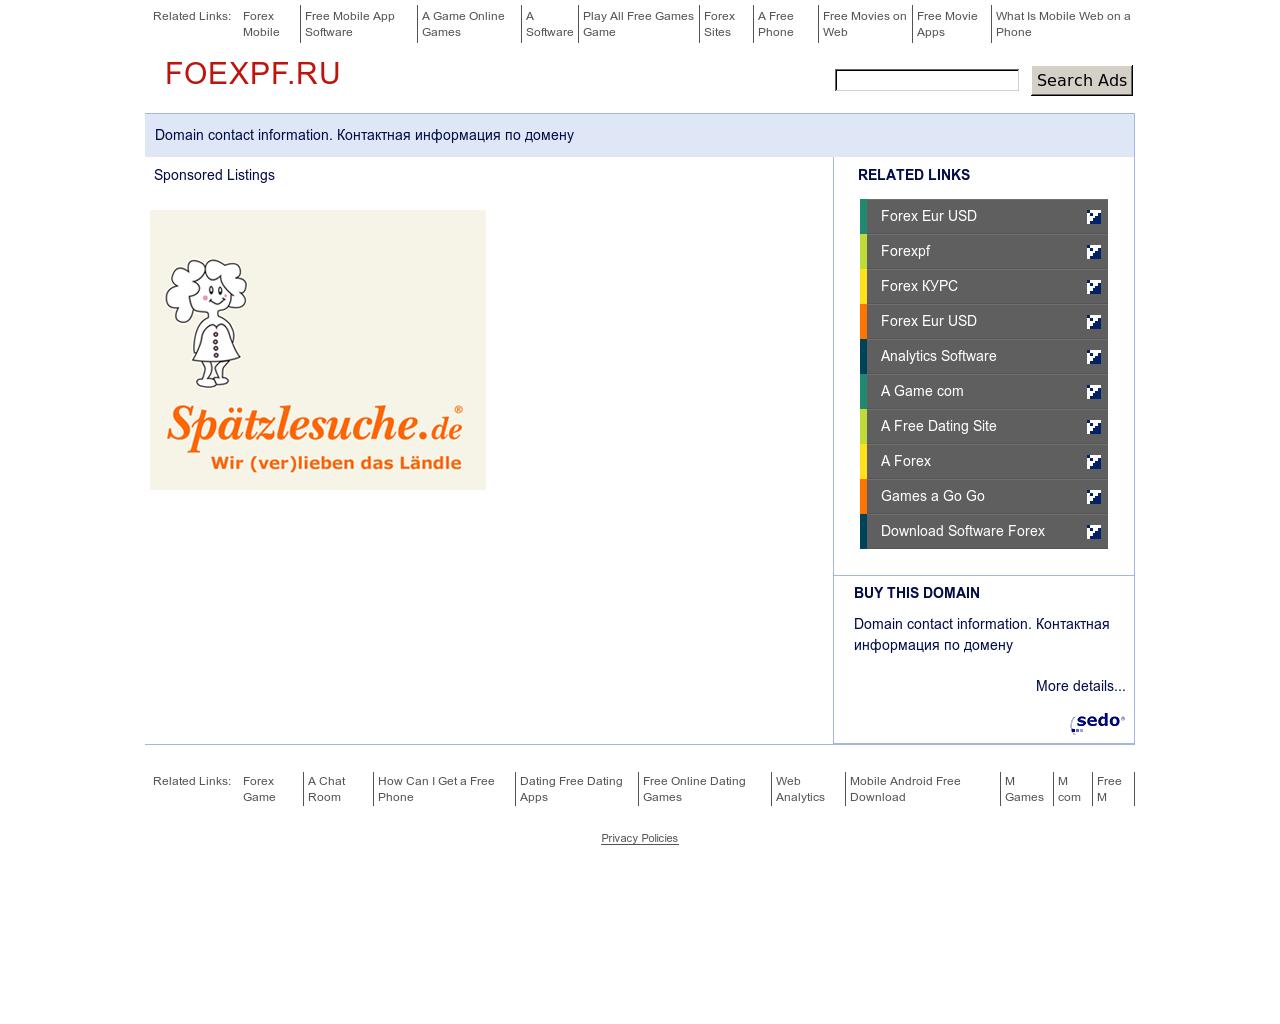 Изображение сайта foexpf.ru в разрешении 1280x1024